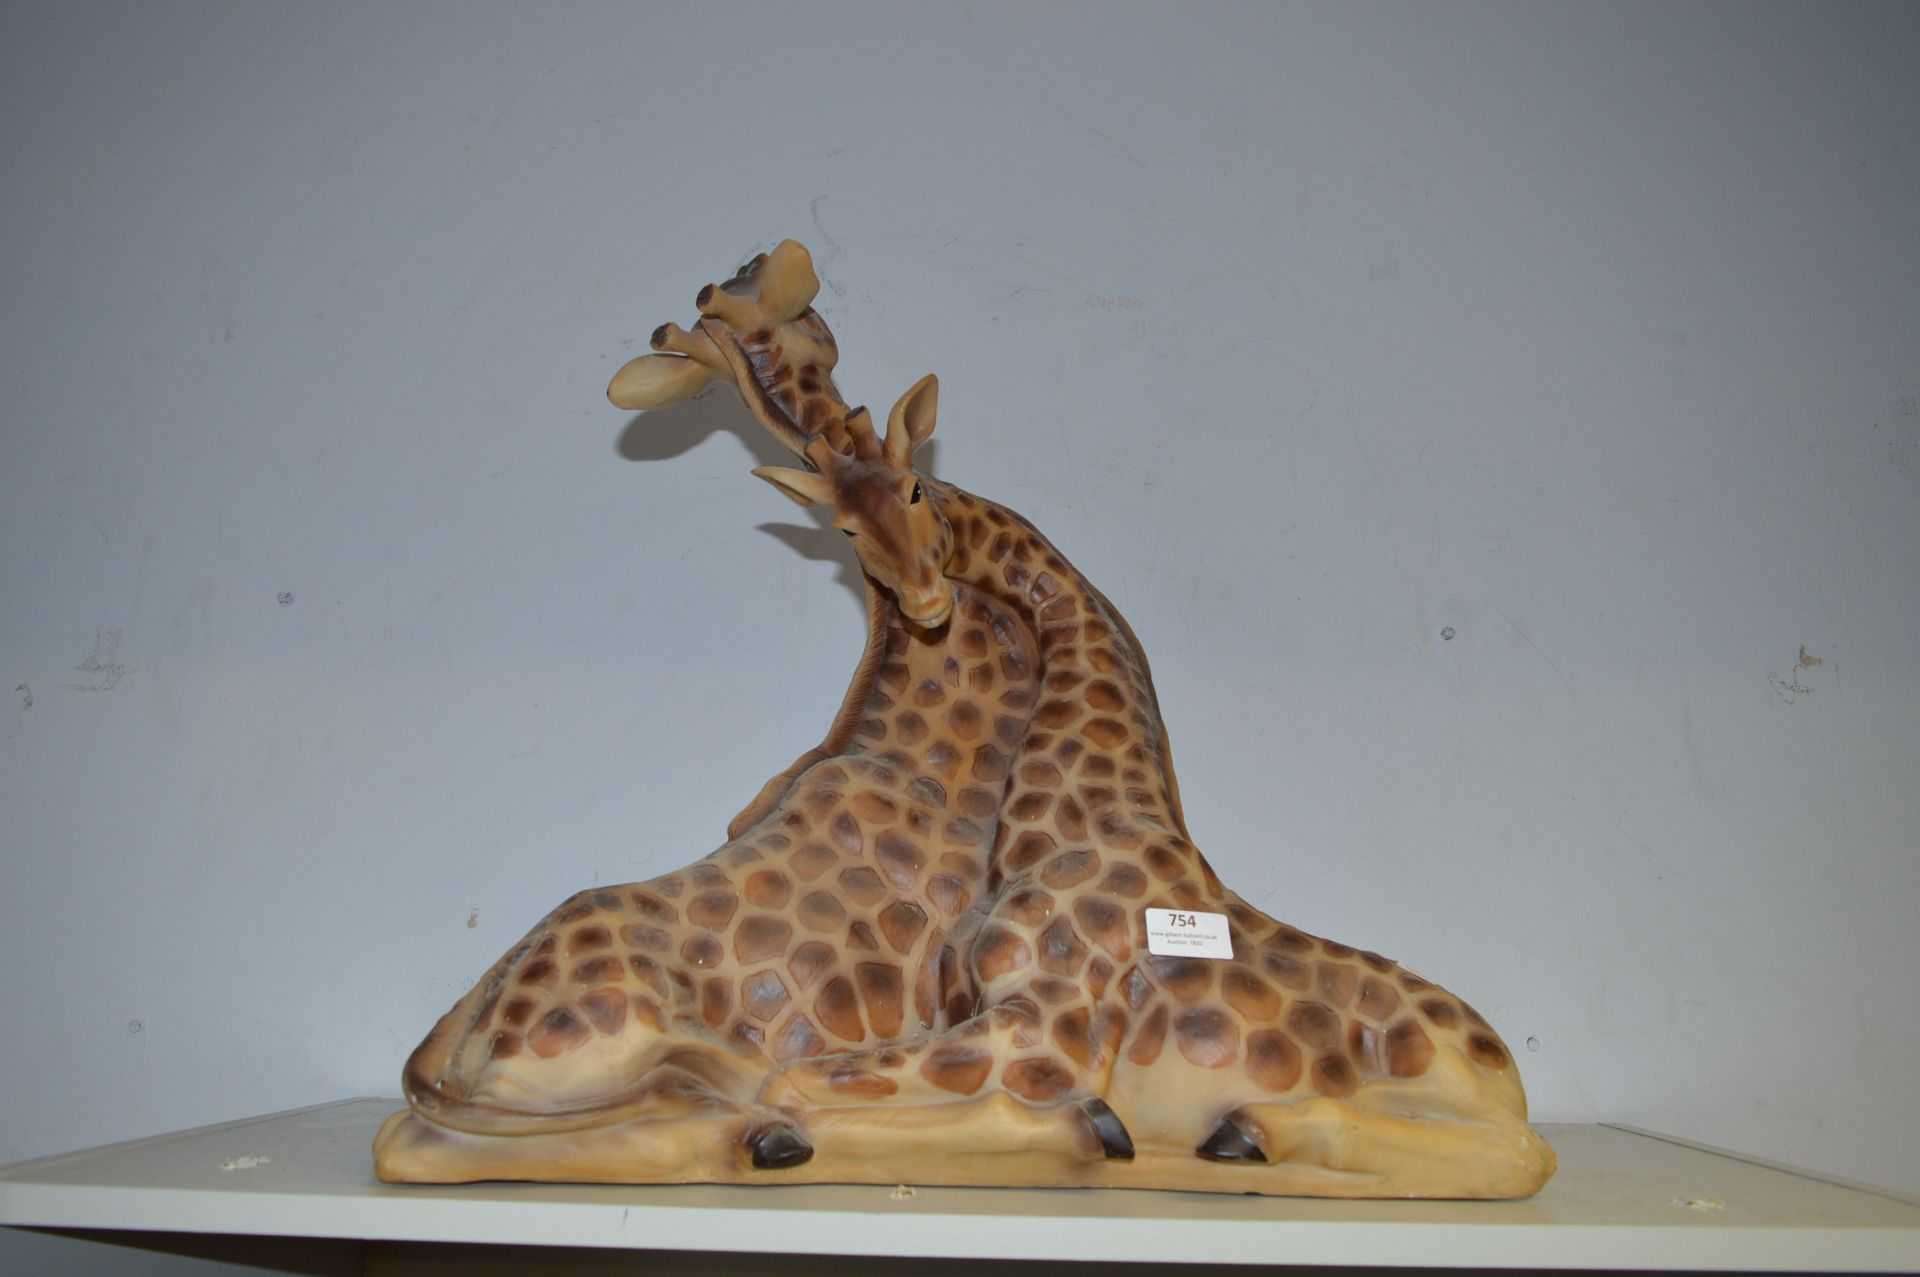 Large Resin Ornament of a Giraffe